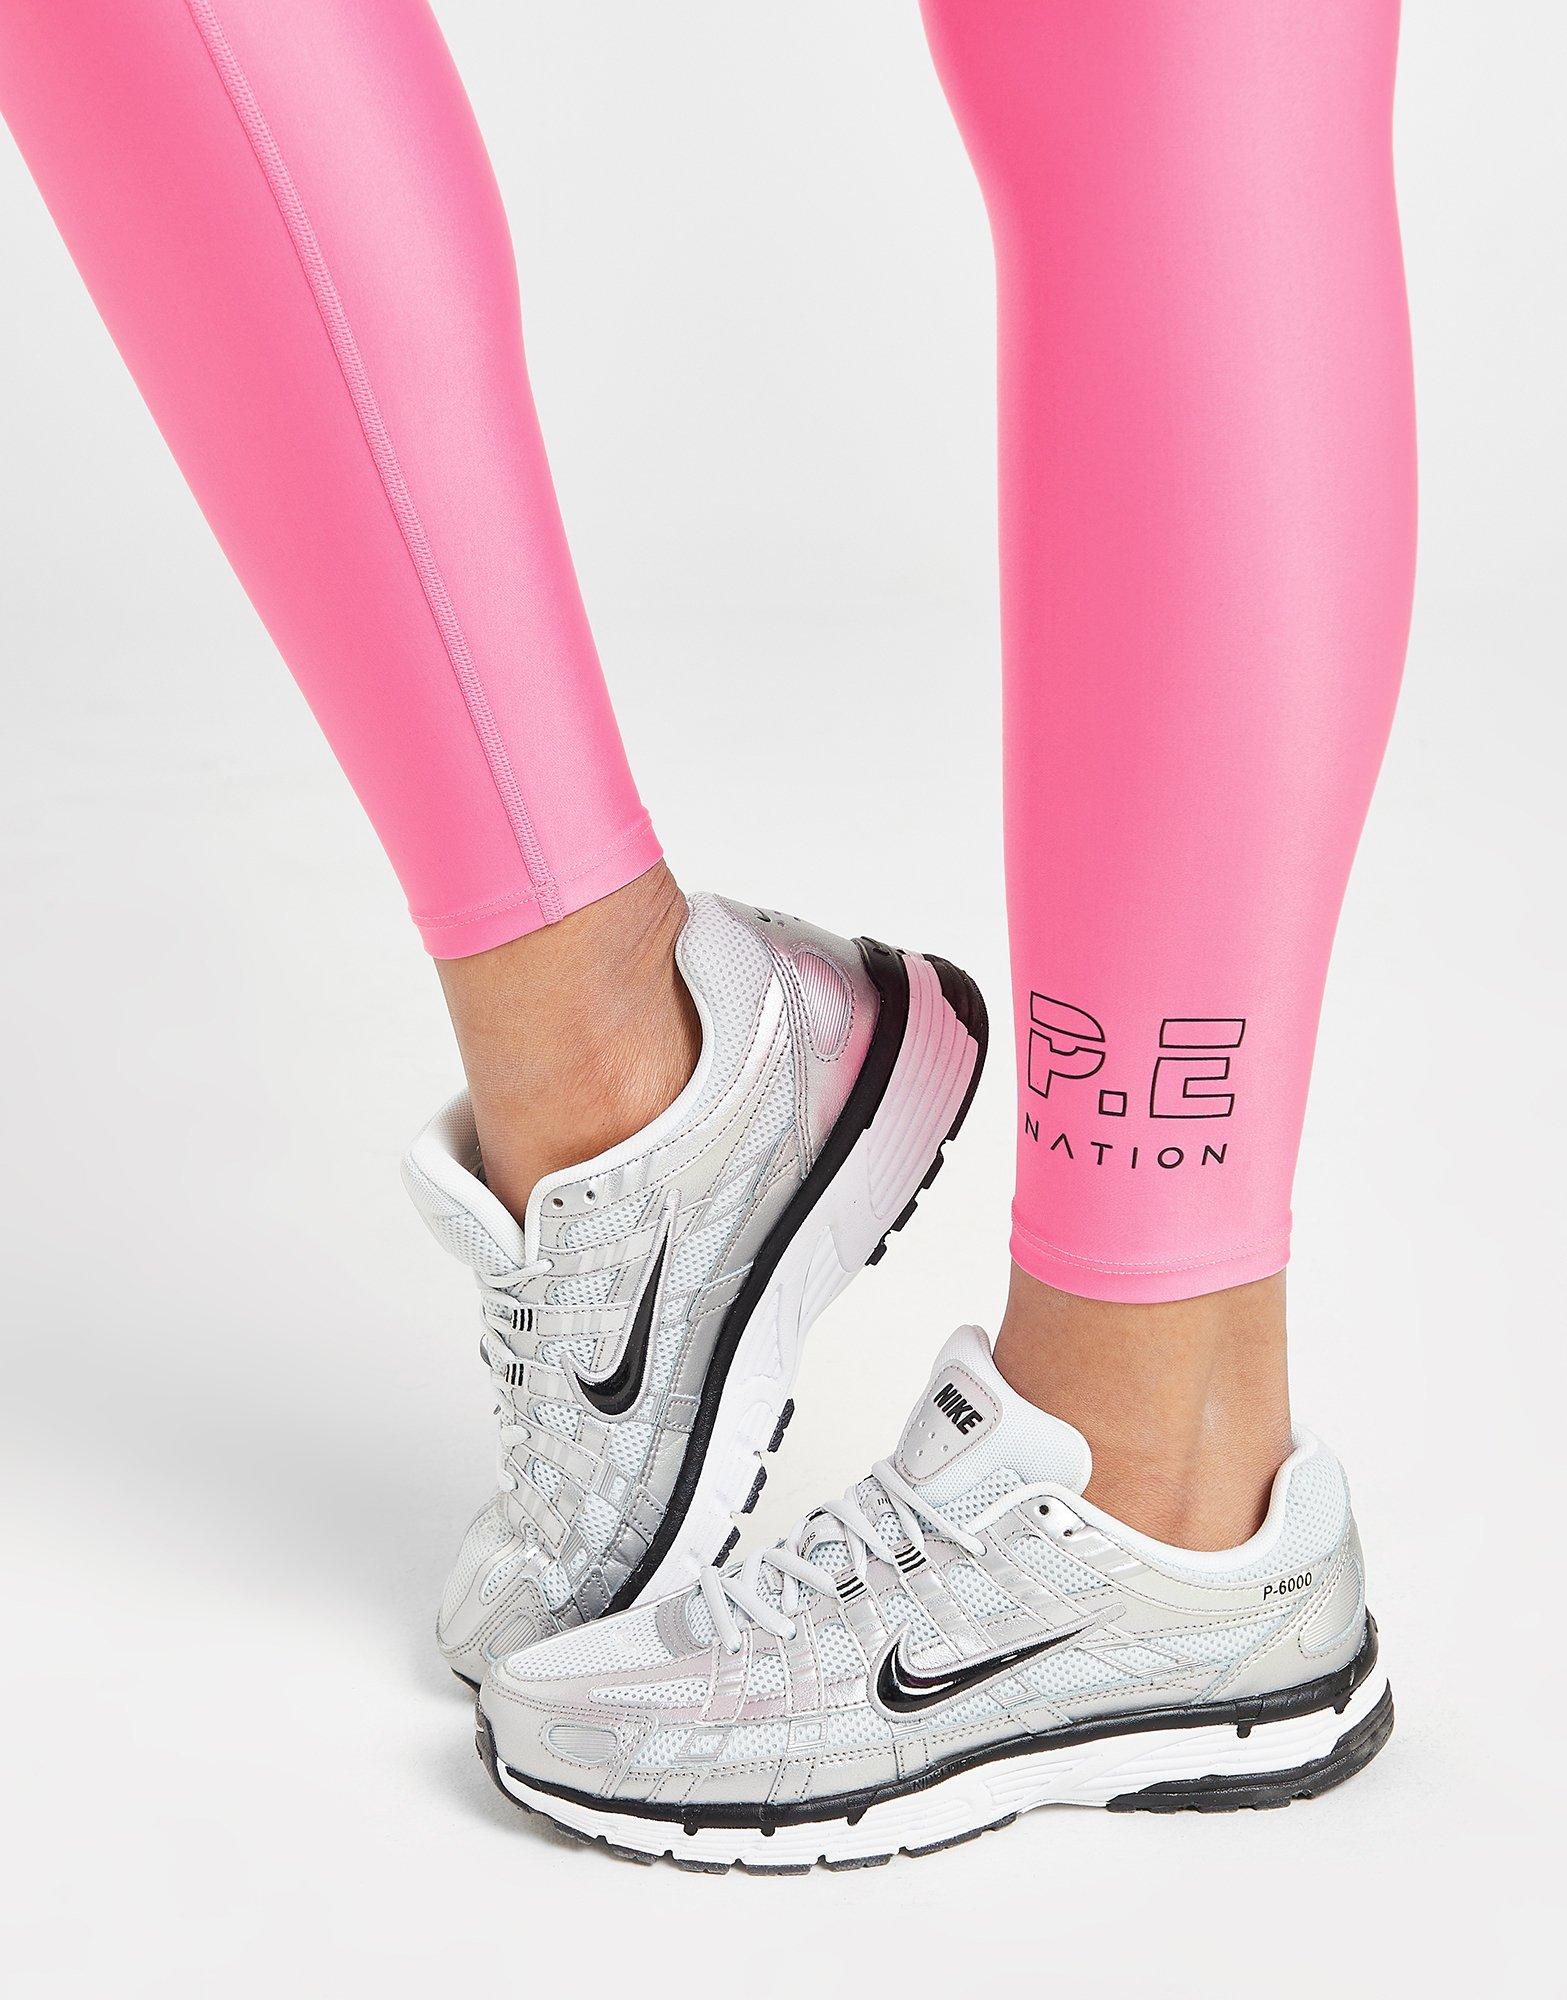 Steady Run Legging, Bright Pink, P.E Nation